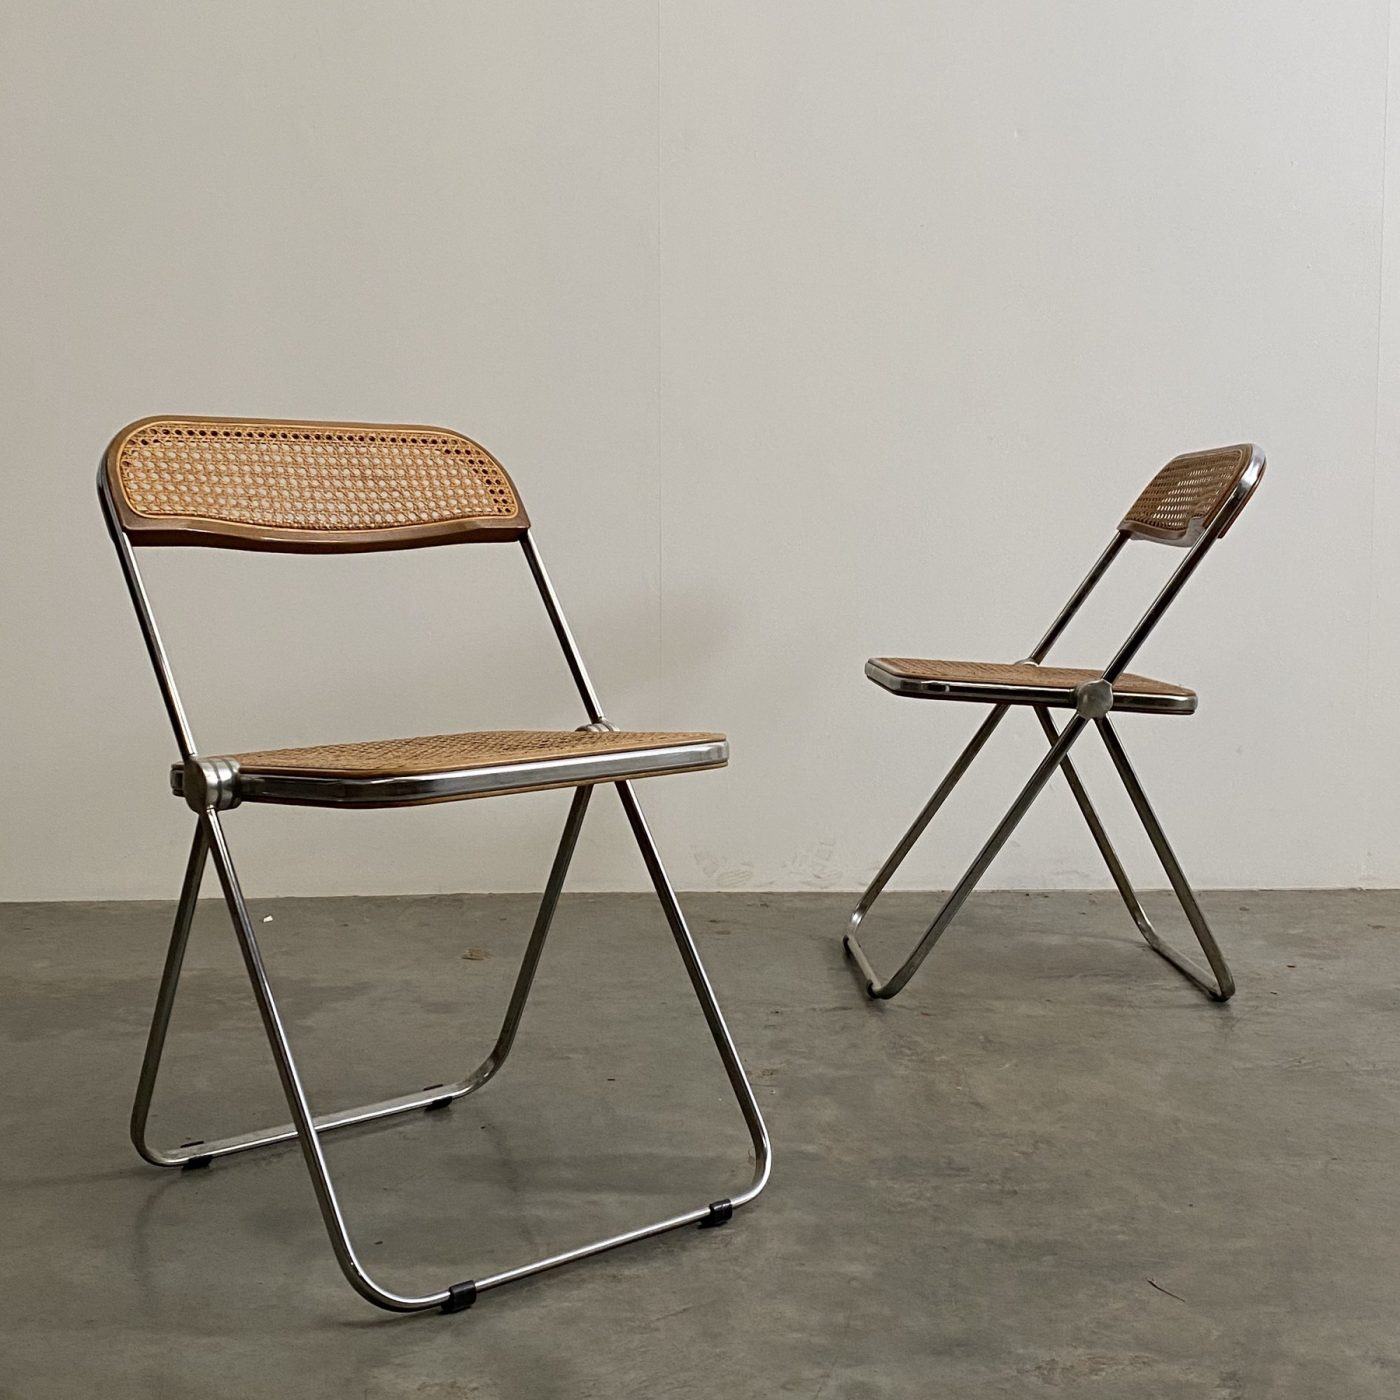 objet-vagabond-folding-chairs0000